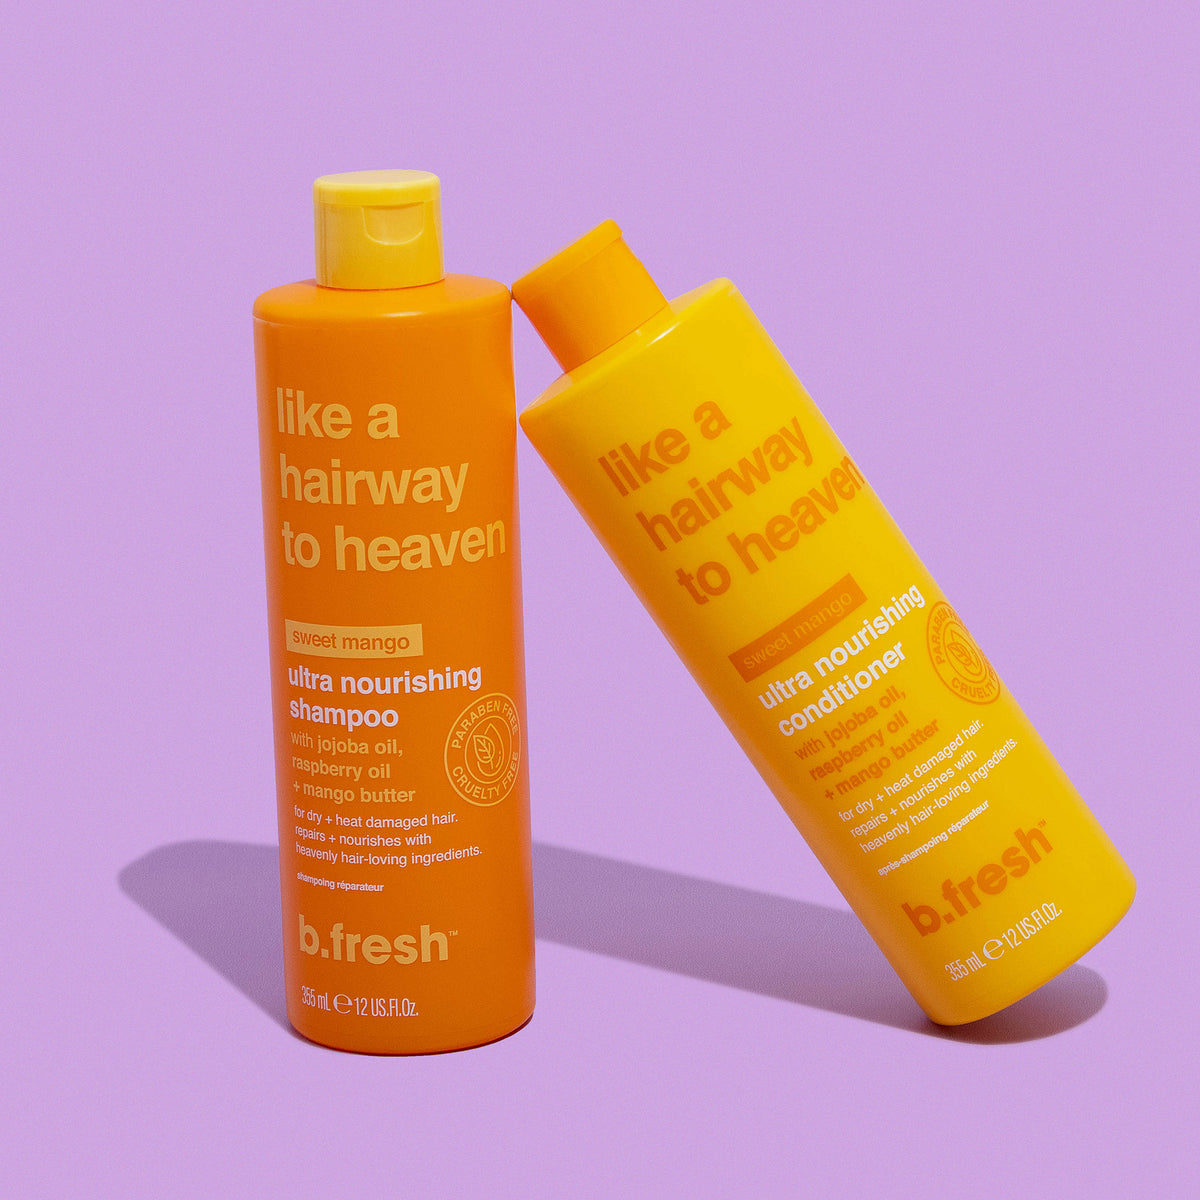 like a hairway to heaven - ultra nourishing shampoo